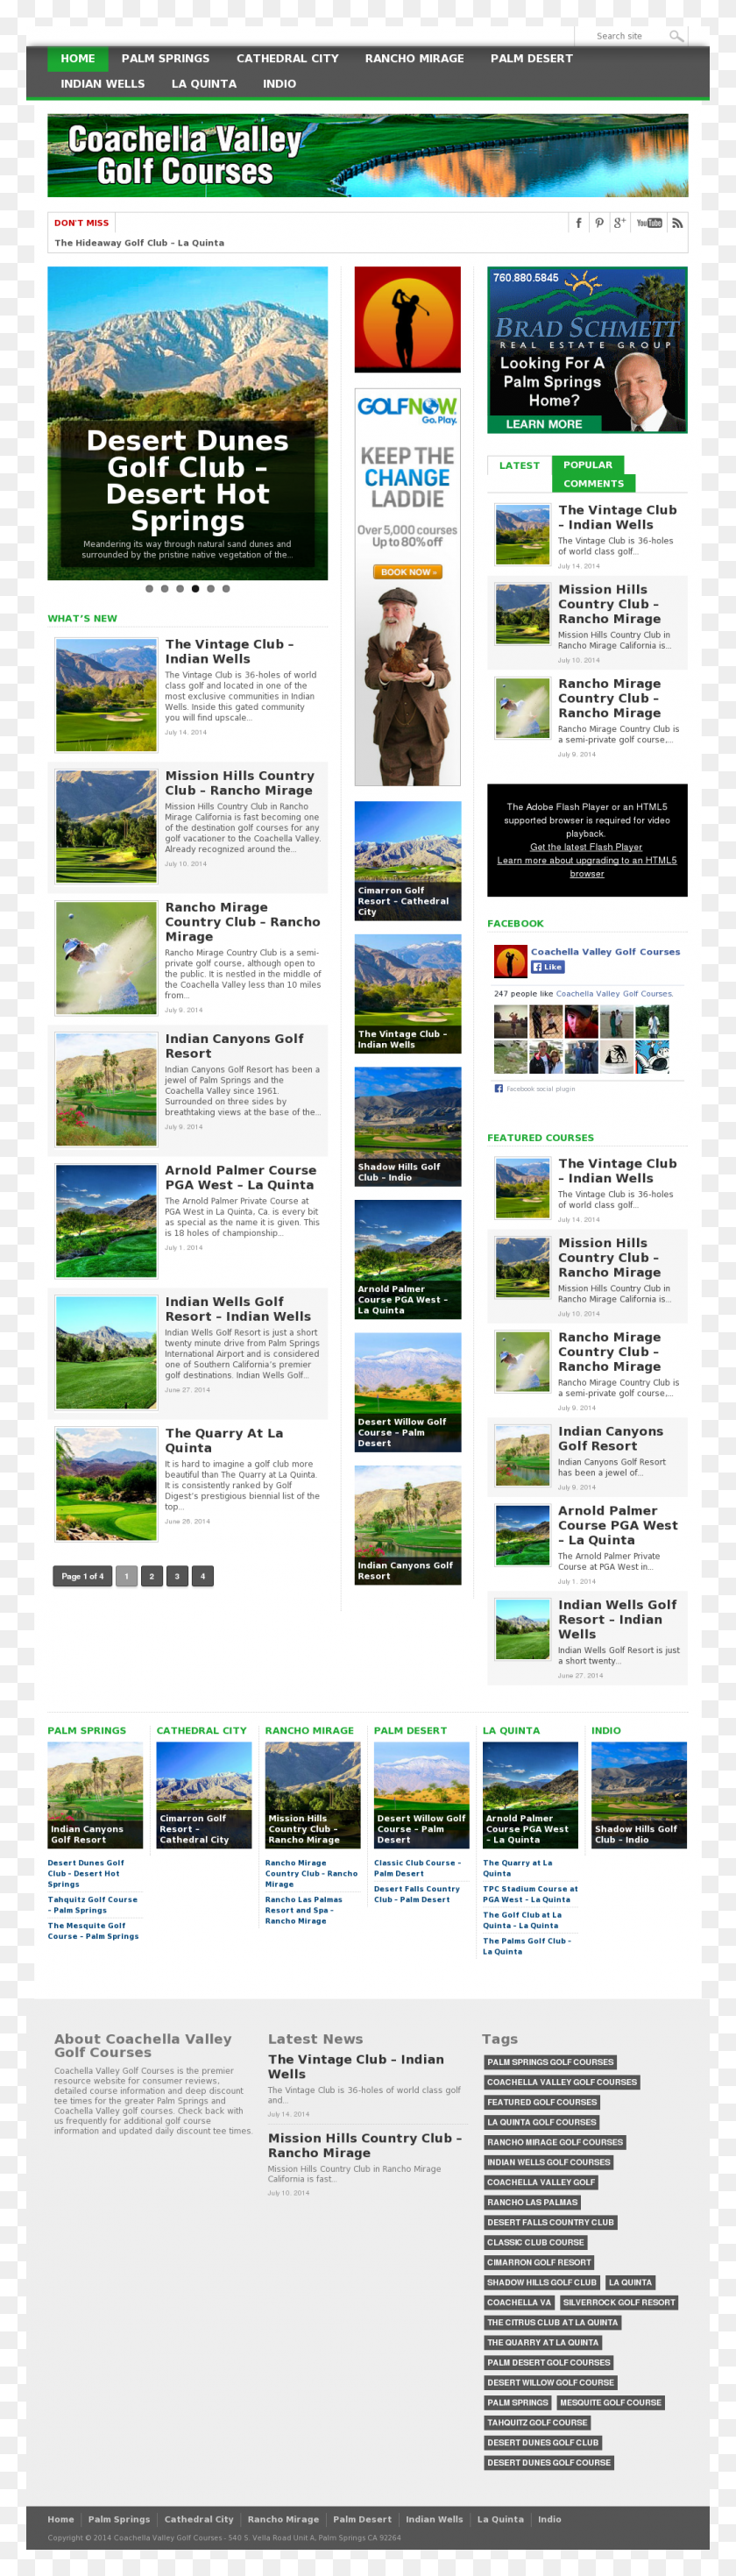 1024x3780 Coachella Valley Golf Courses Competitors Revenue Brochure, Poster, Advertisement, Flyer HD PNG Download